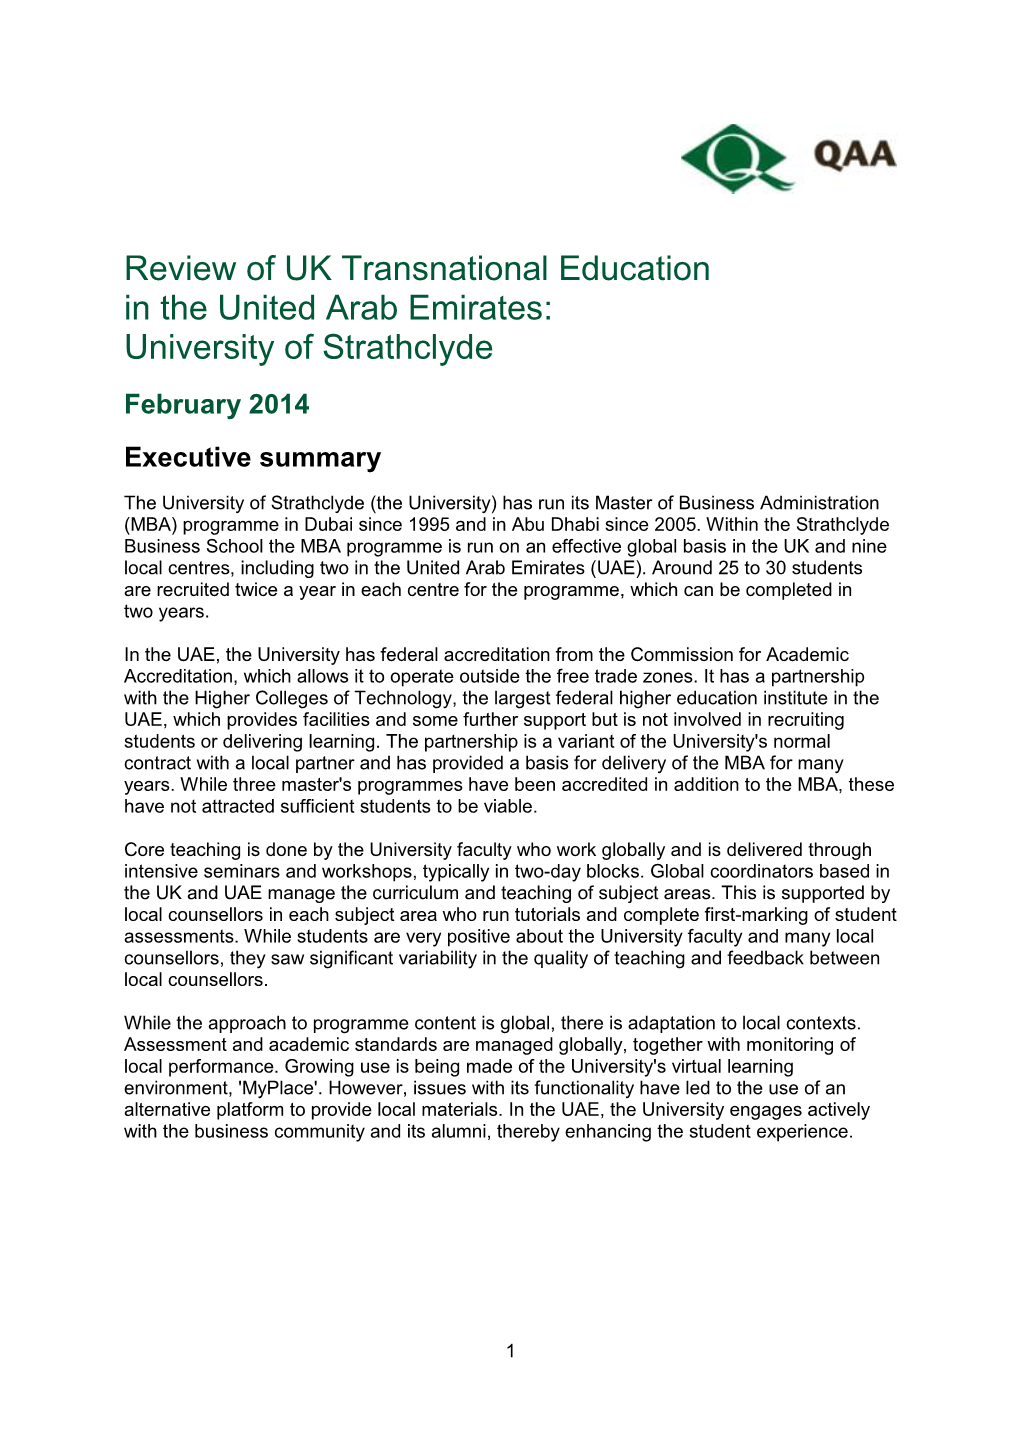 University of Strathclyde February 2014 Executive Summary